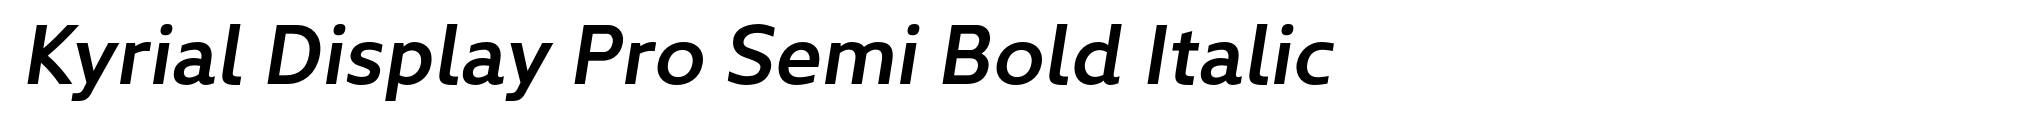 Kyrial Display Pro Semi Bold Italic image